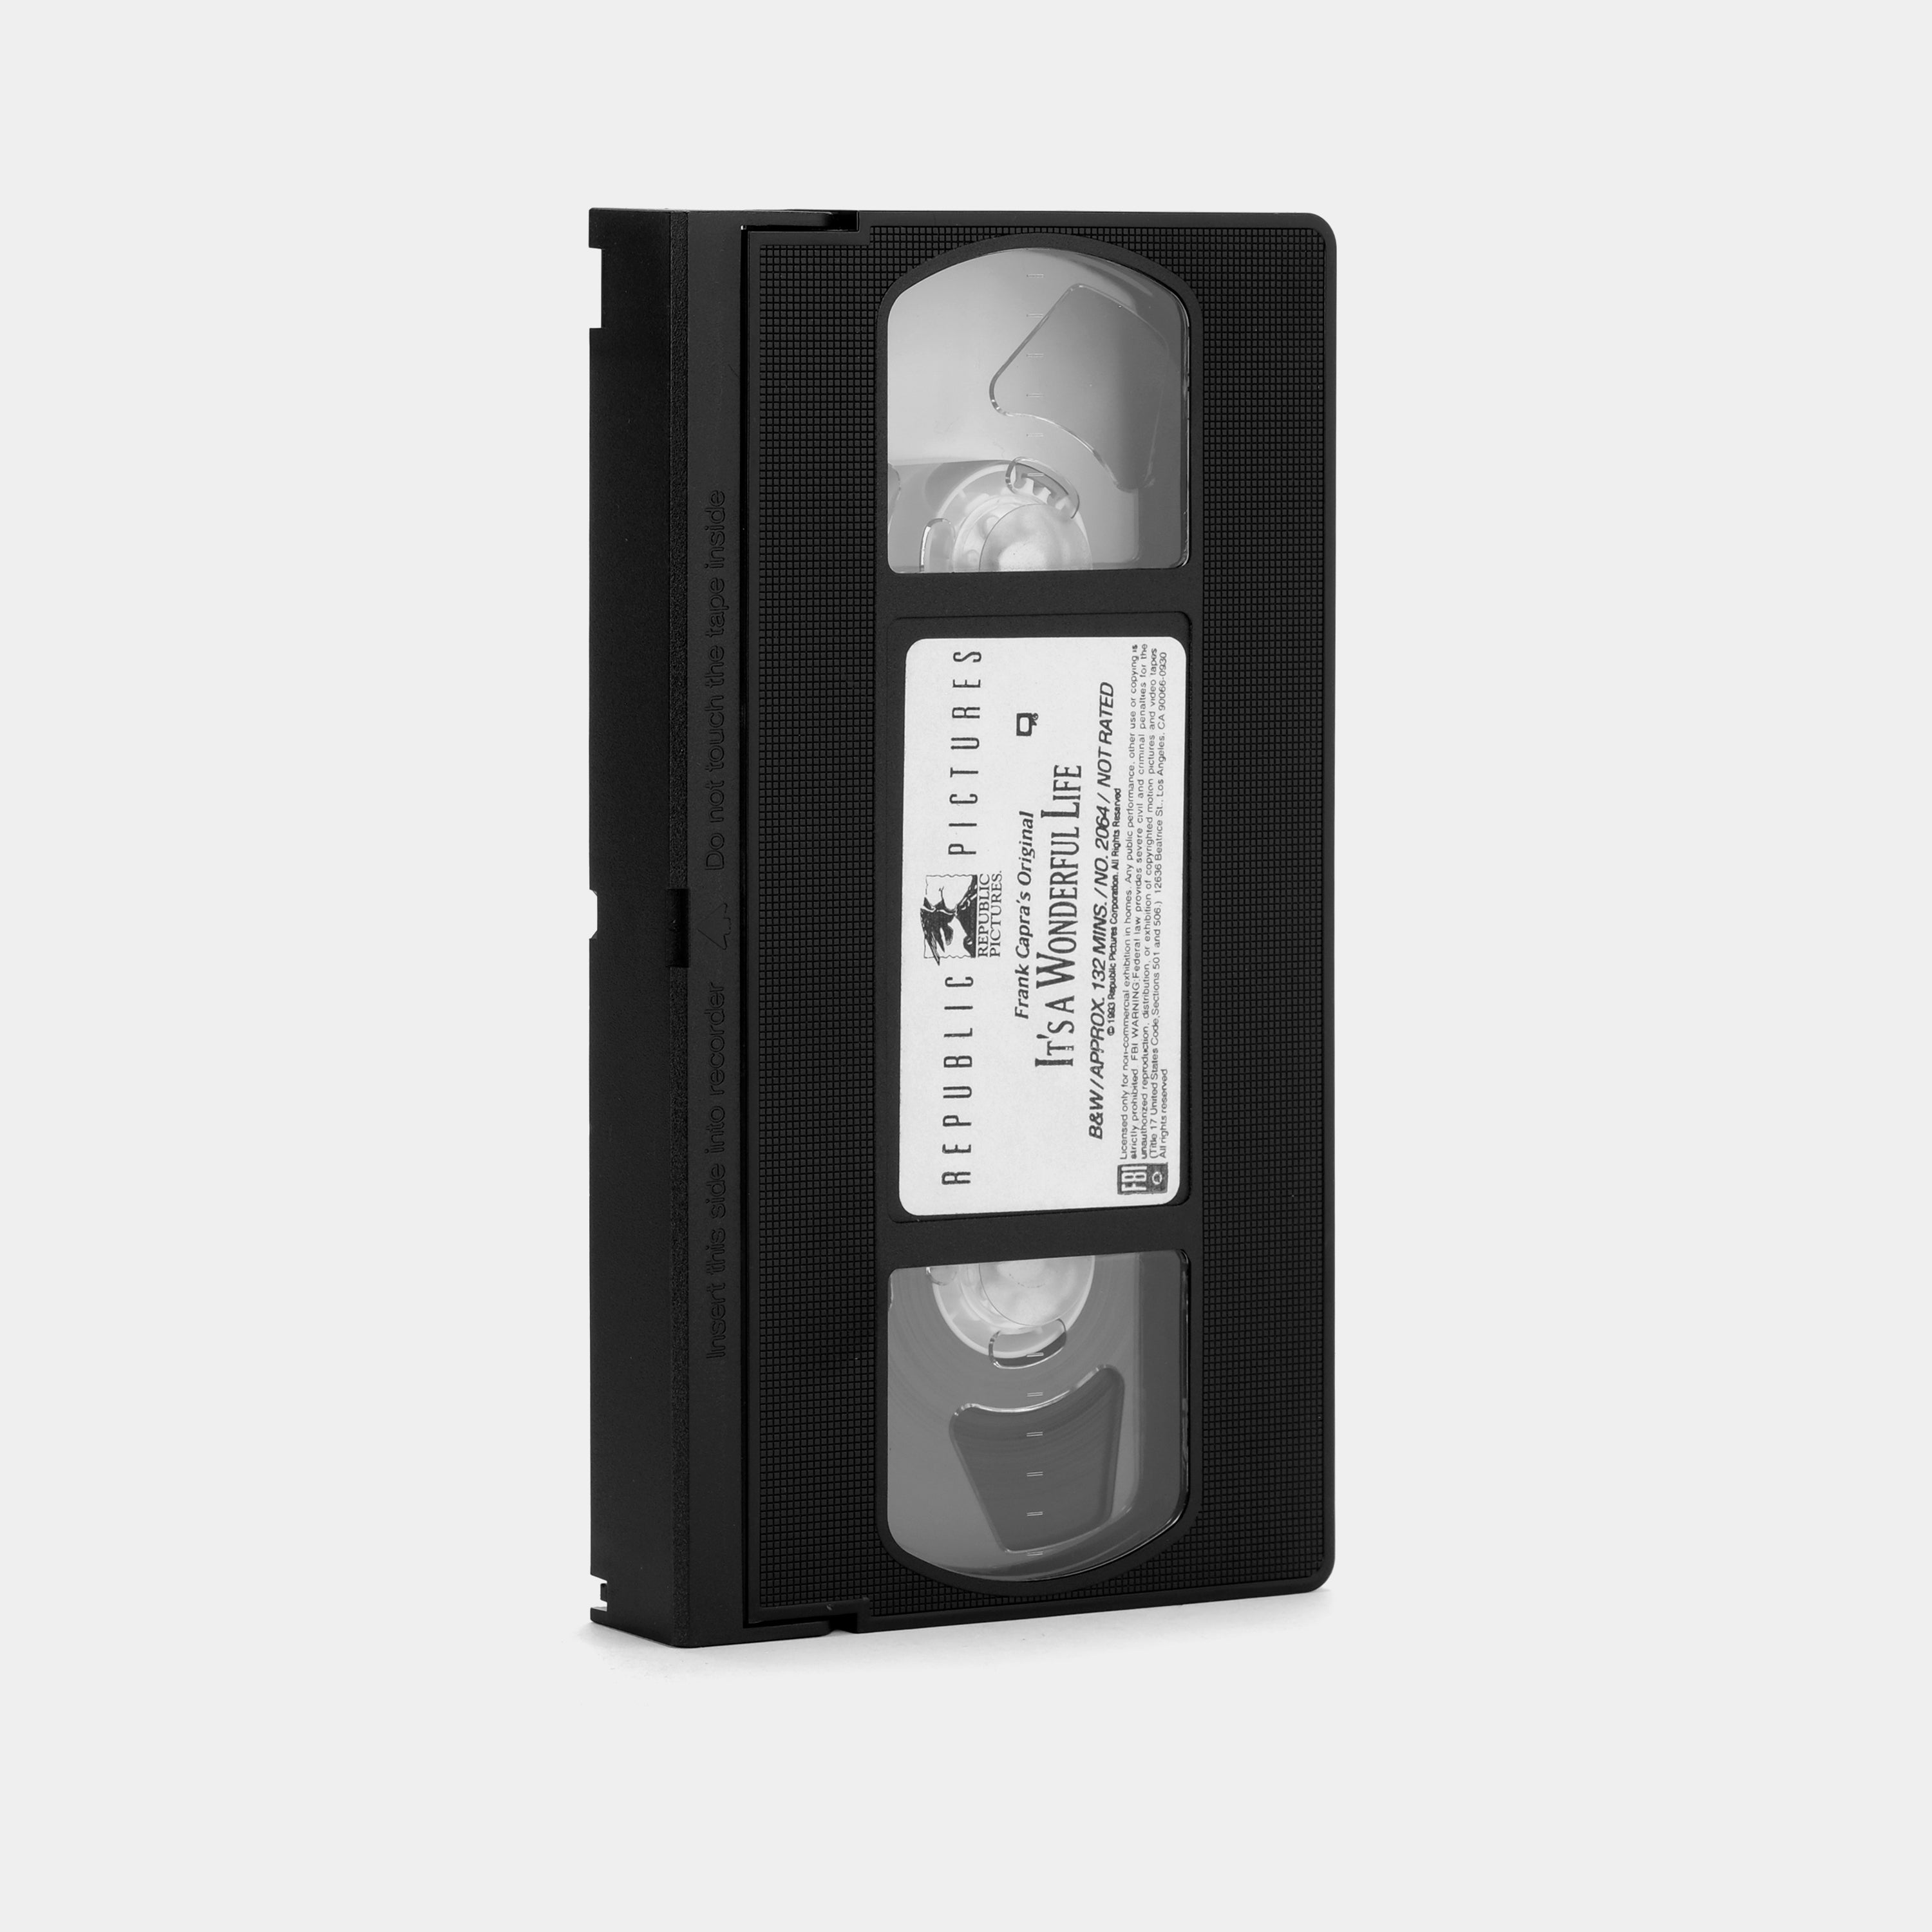 It's a Wonderful Life VHS Tape